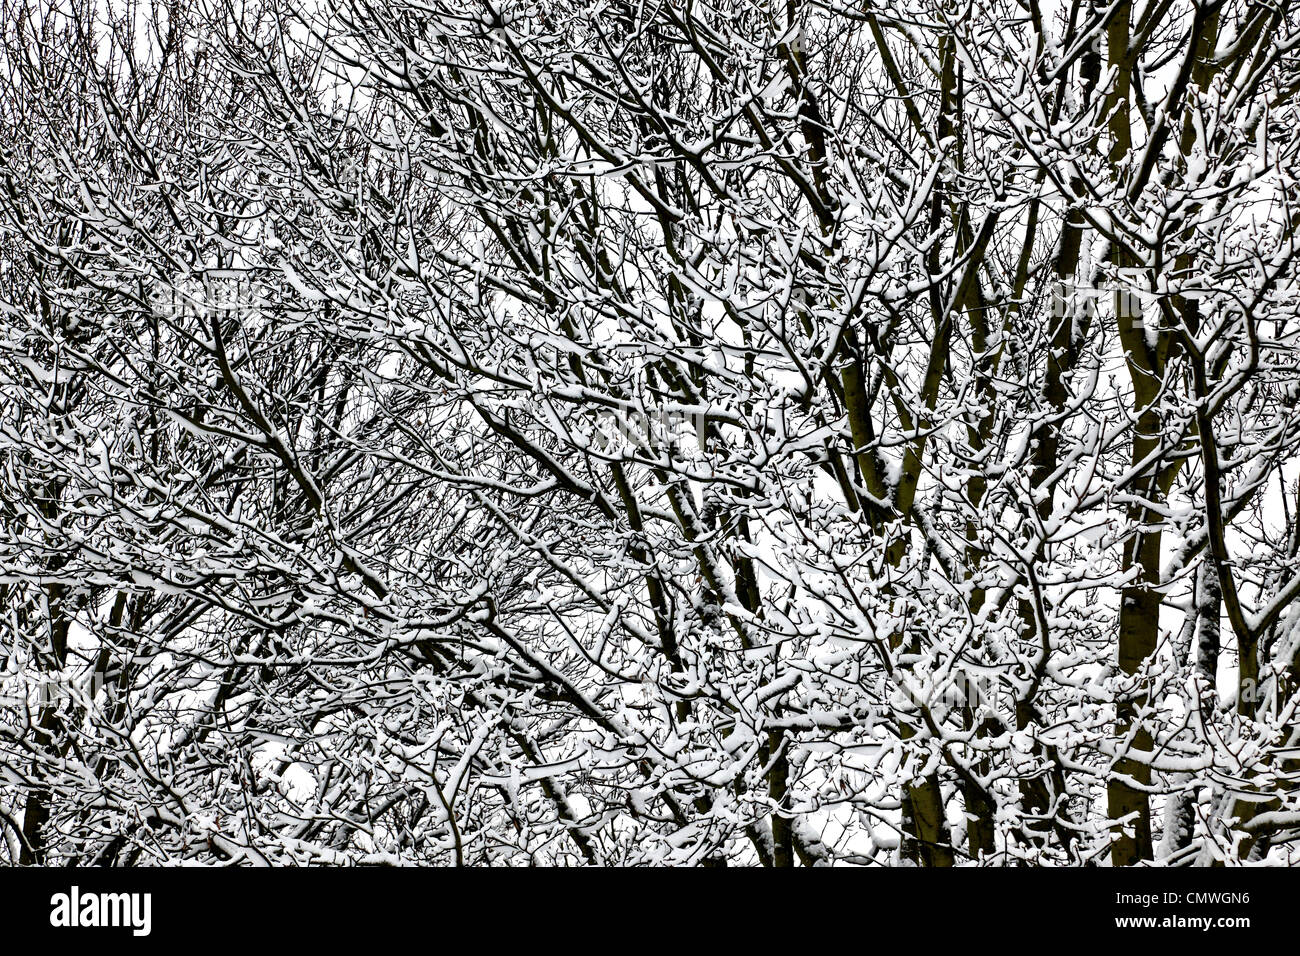 3699. Snow on trees, Kent, UK Stock Photo